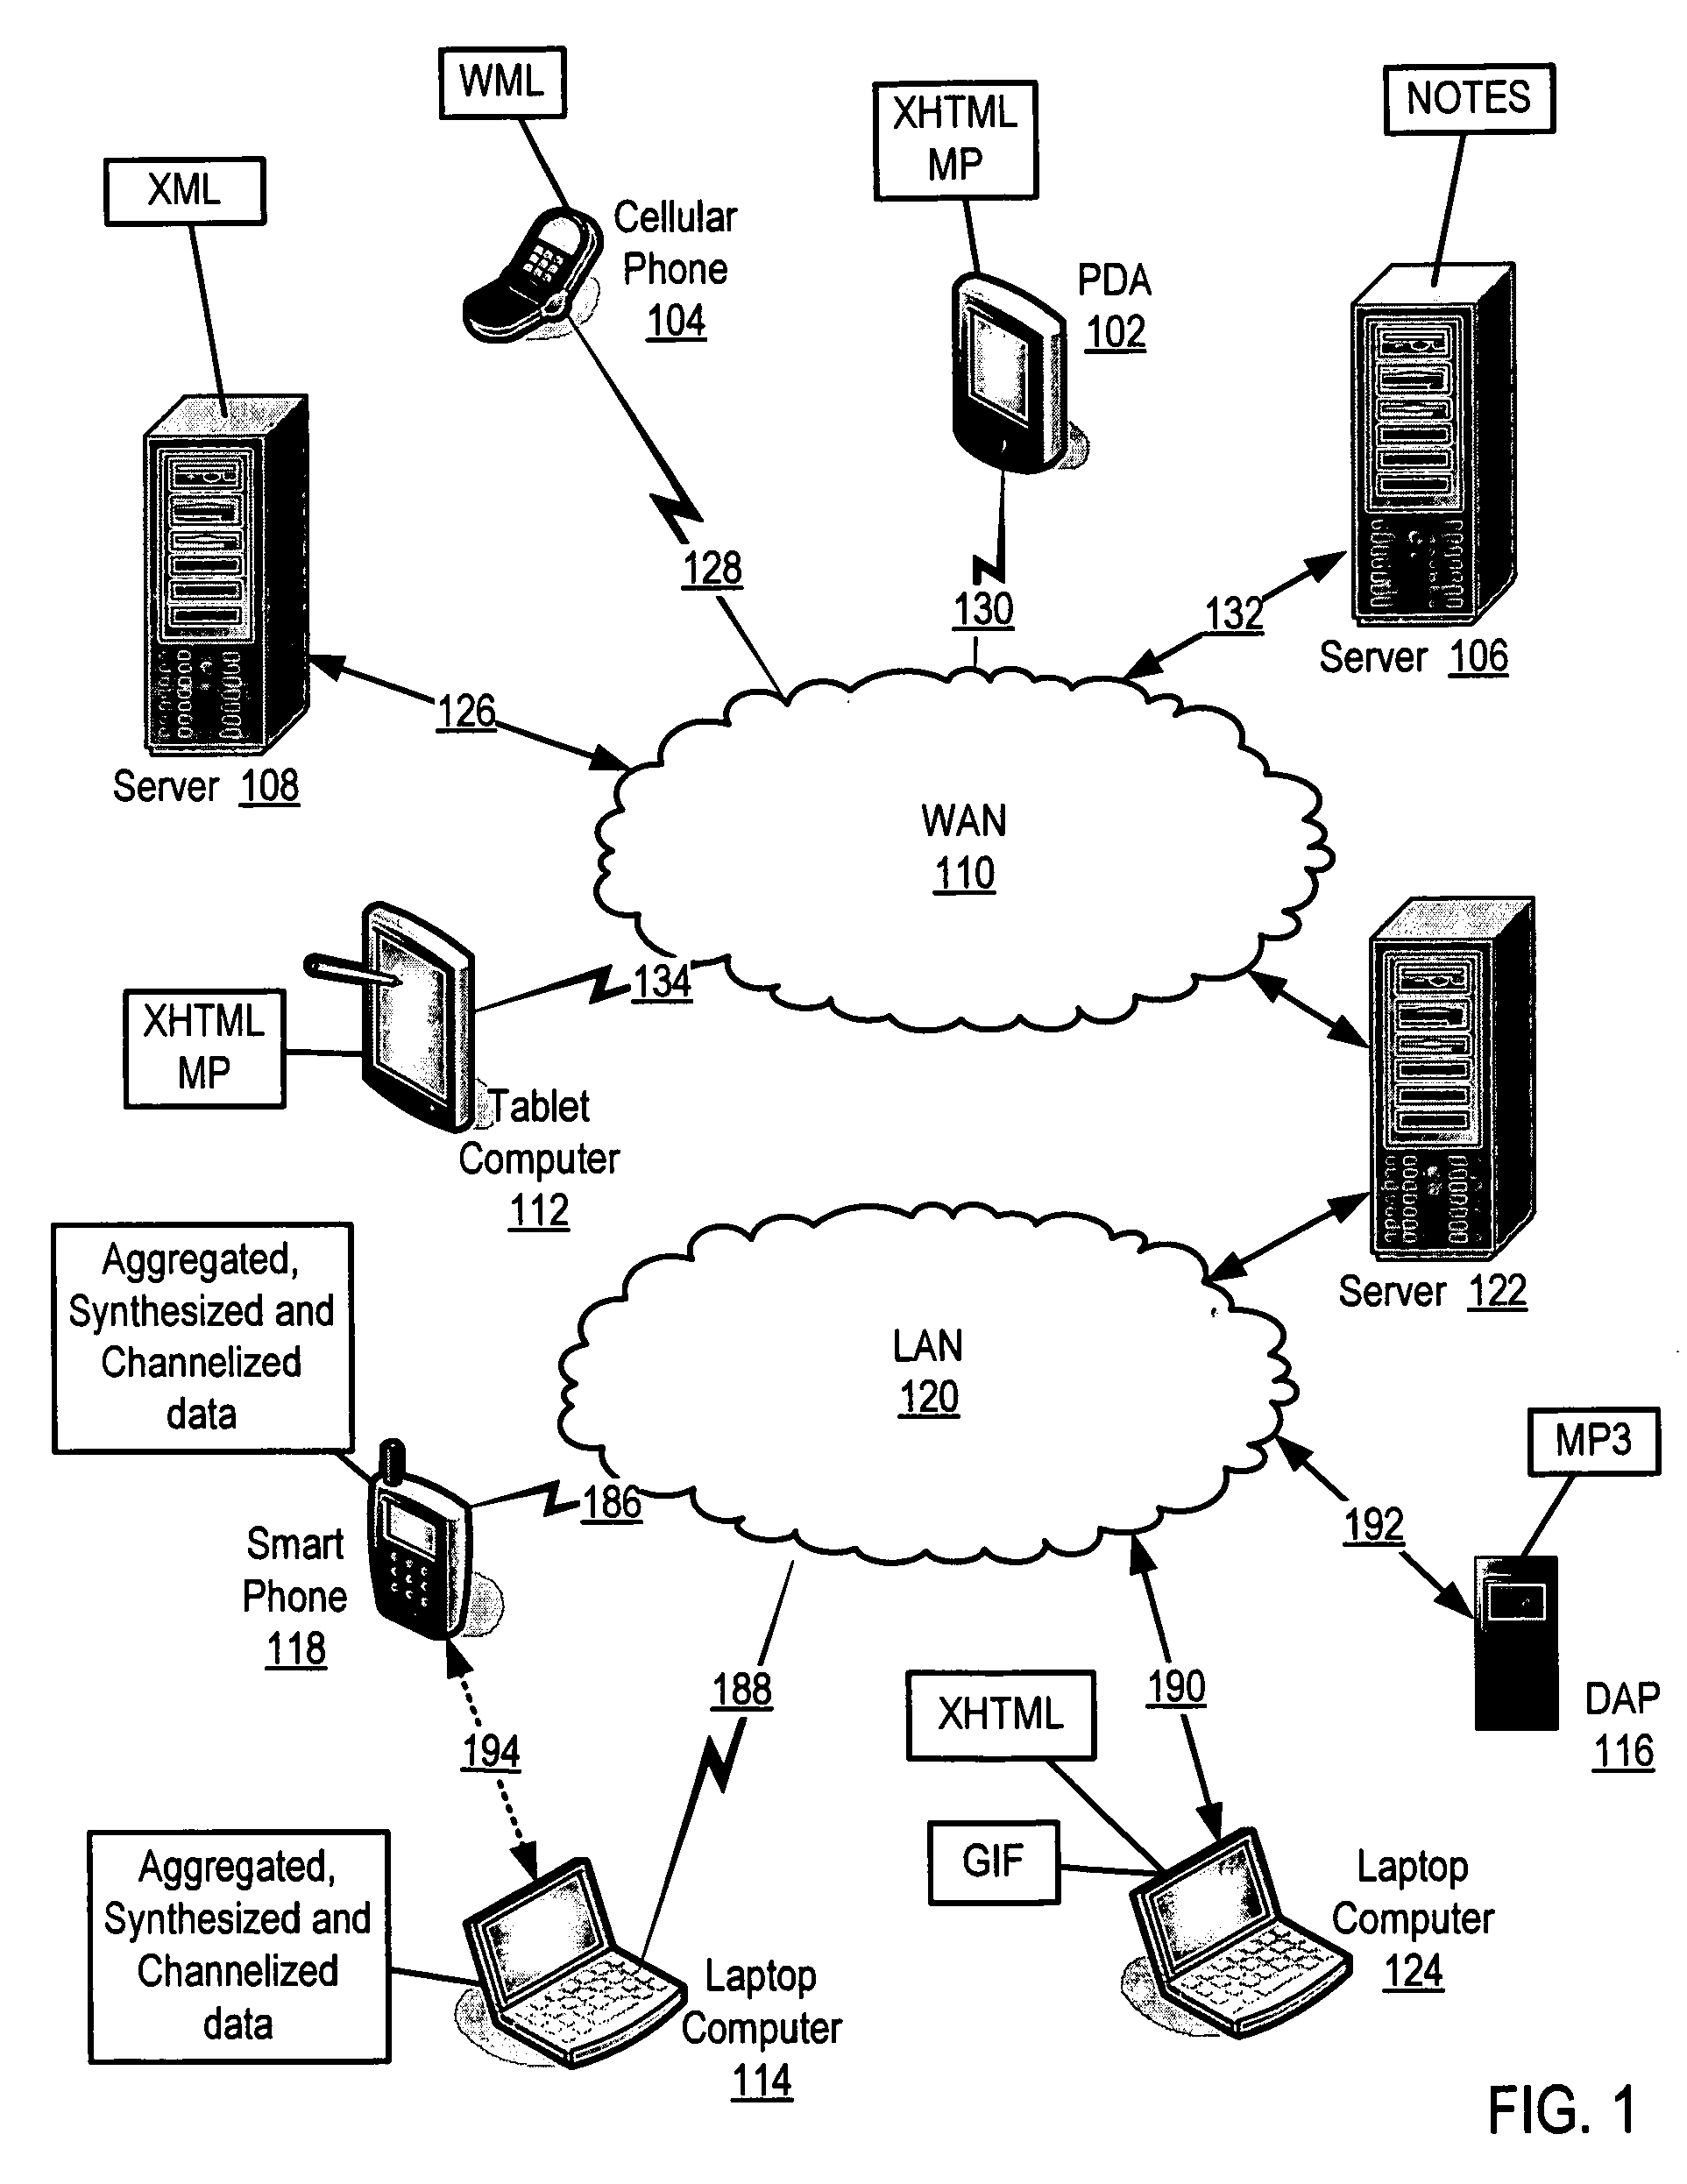 Schedule-based connectivity management